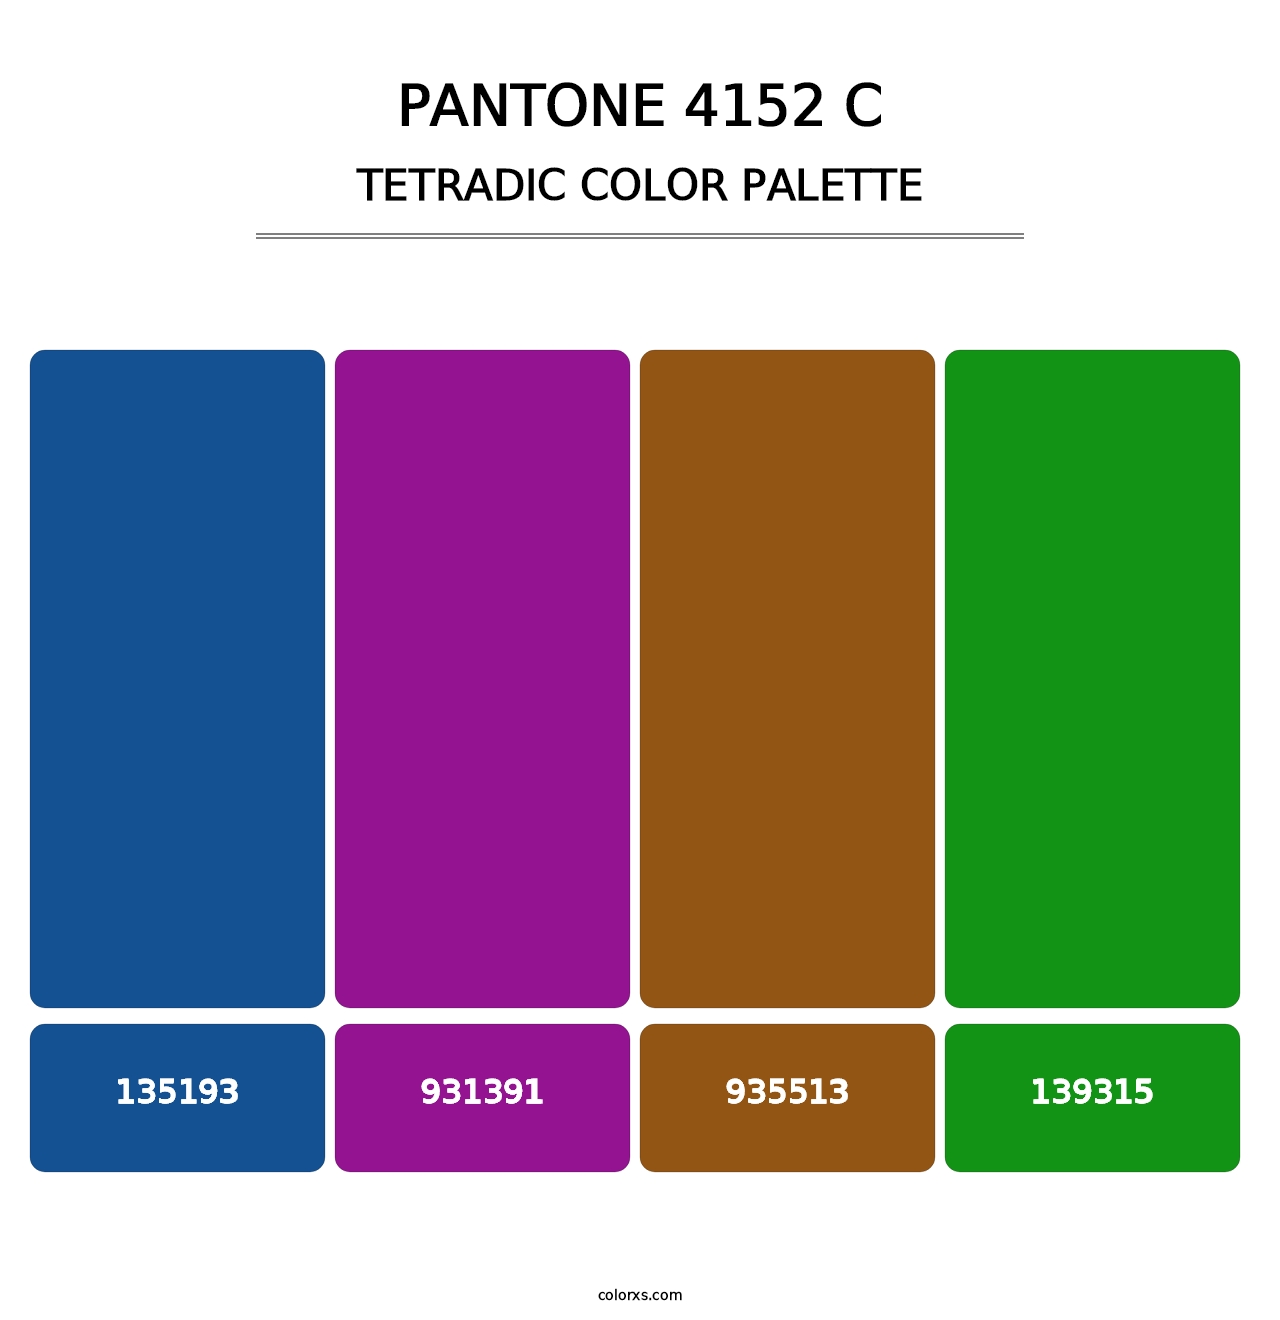 PANTONE 4152 C - Tetradic Color Palette